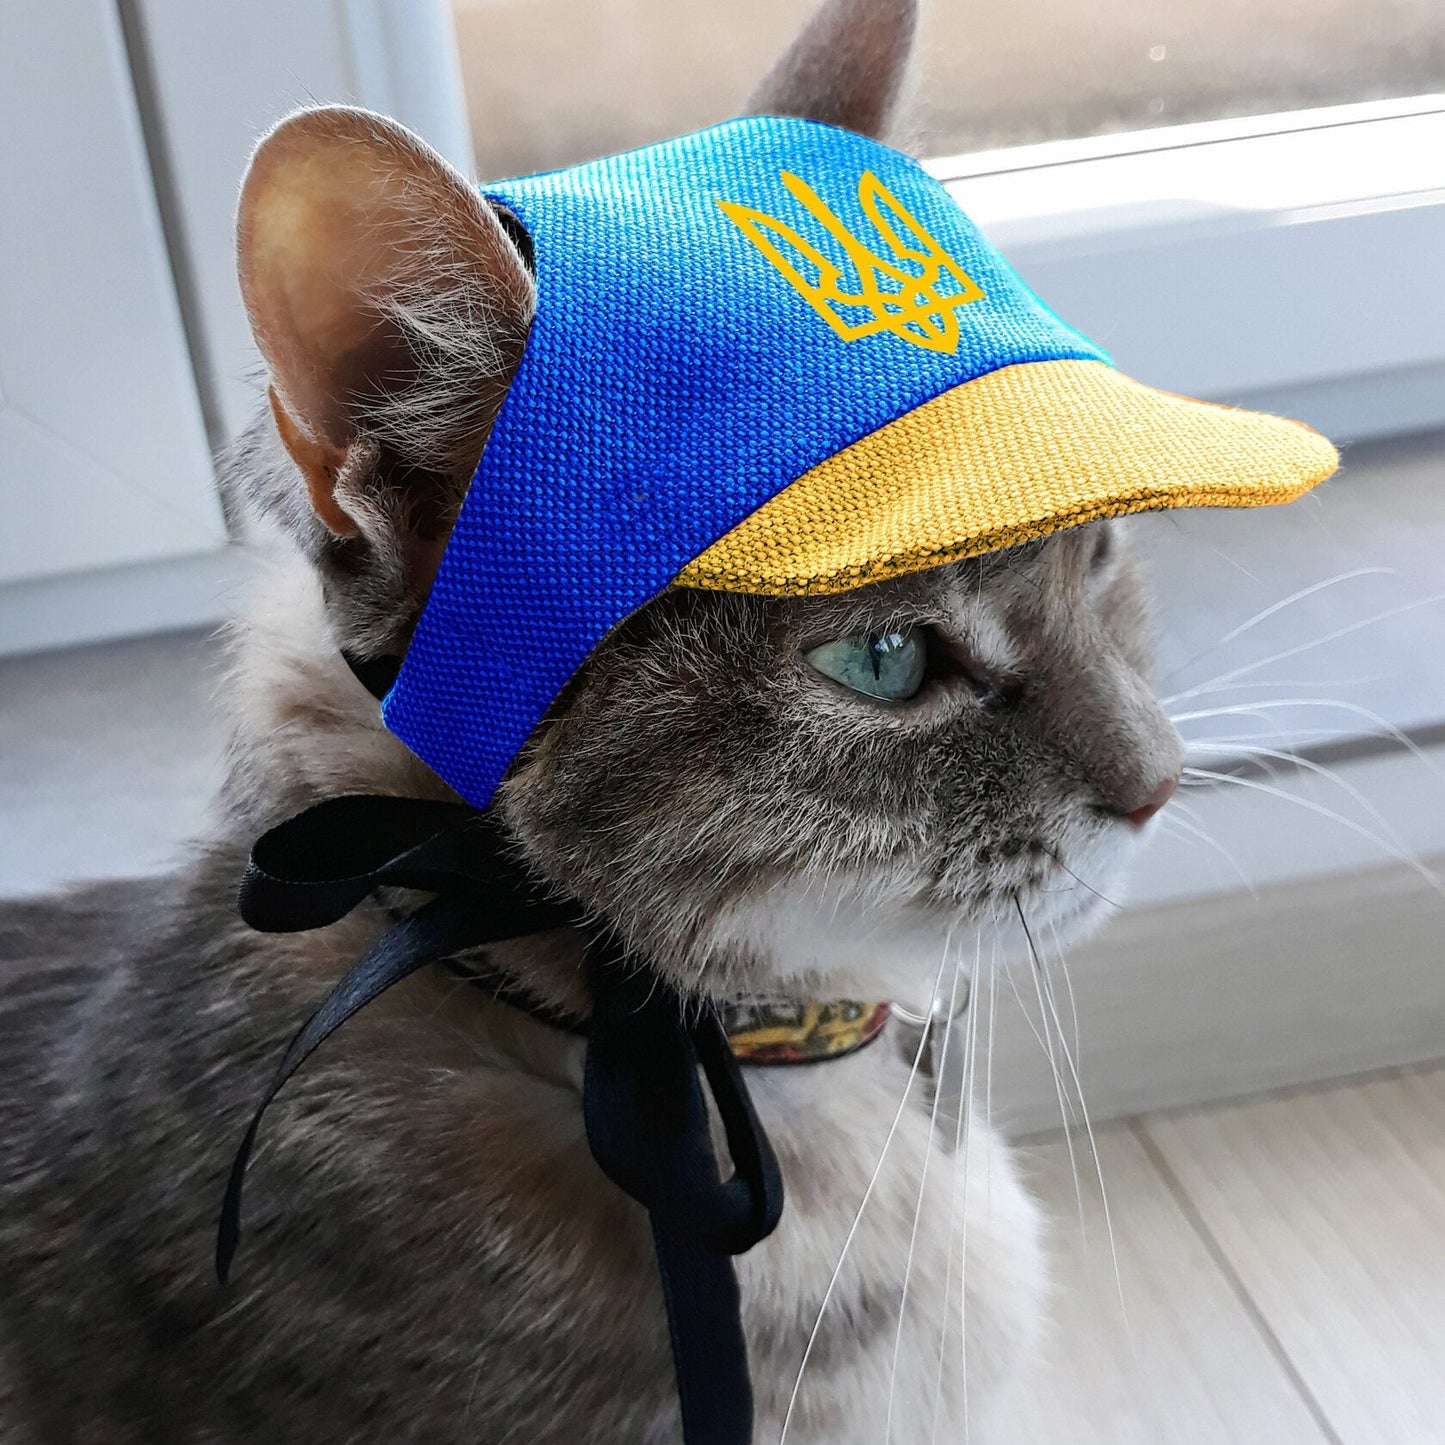 Coat of arms of Ukraine hat for cat